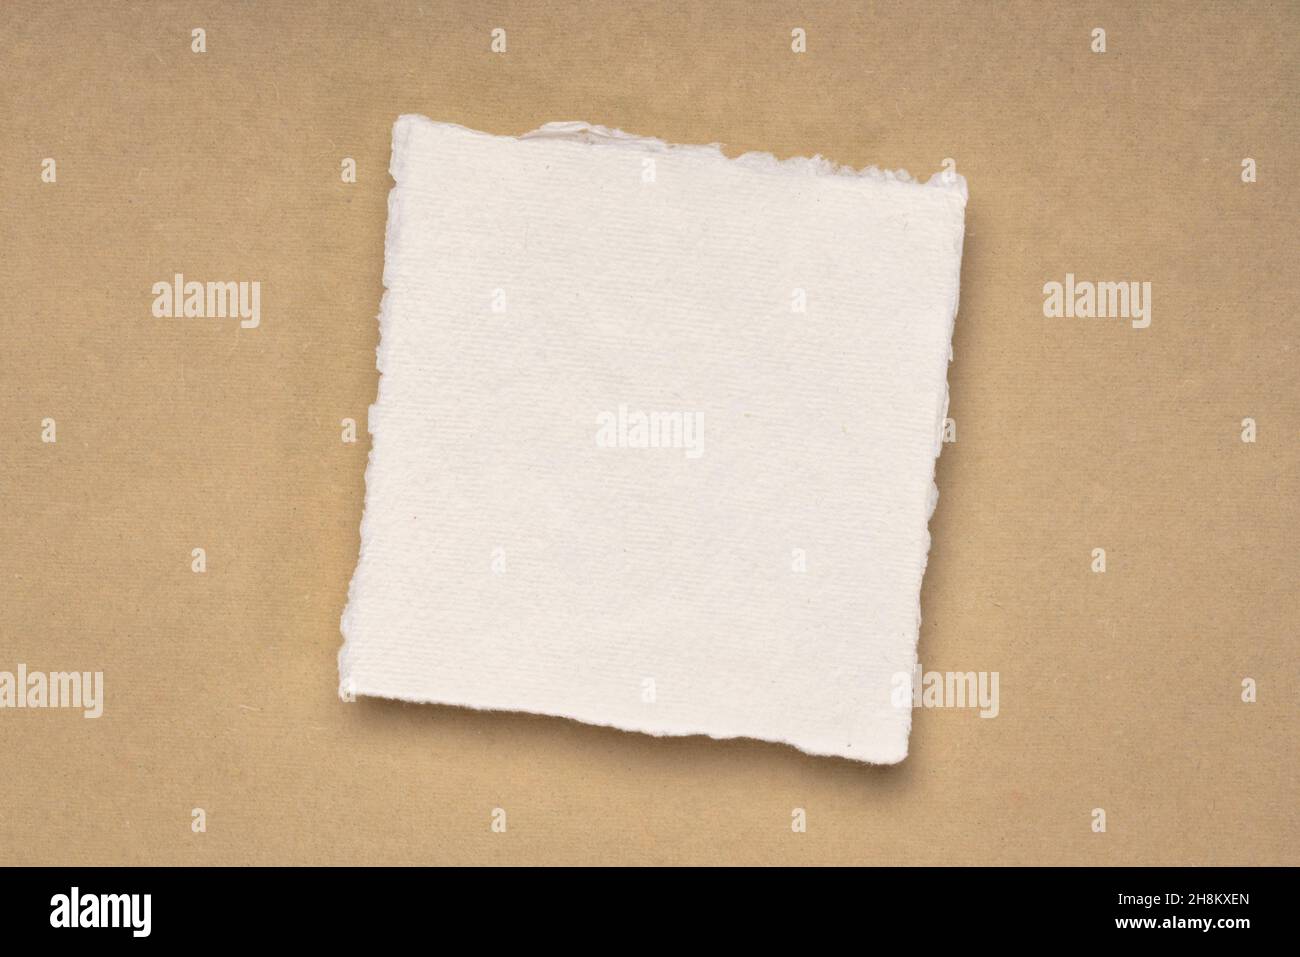 small square sheet of blank white Khadi paper against beige rag